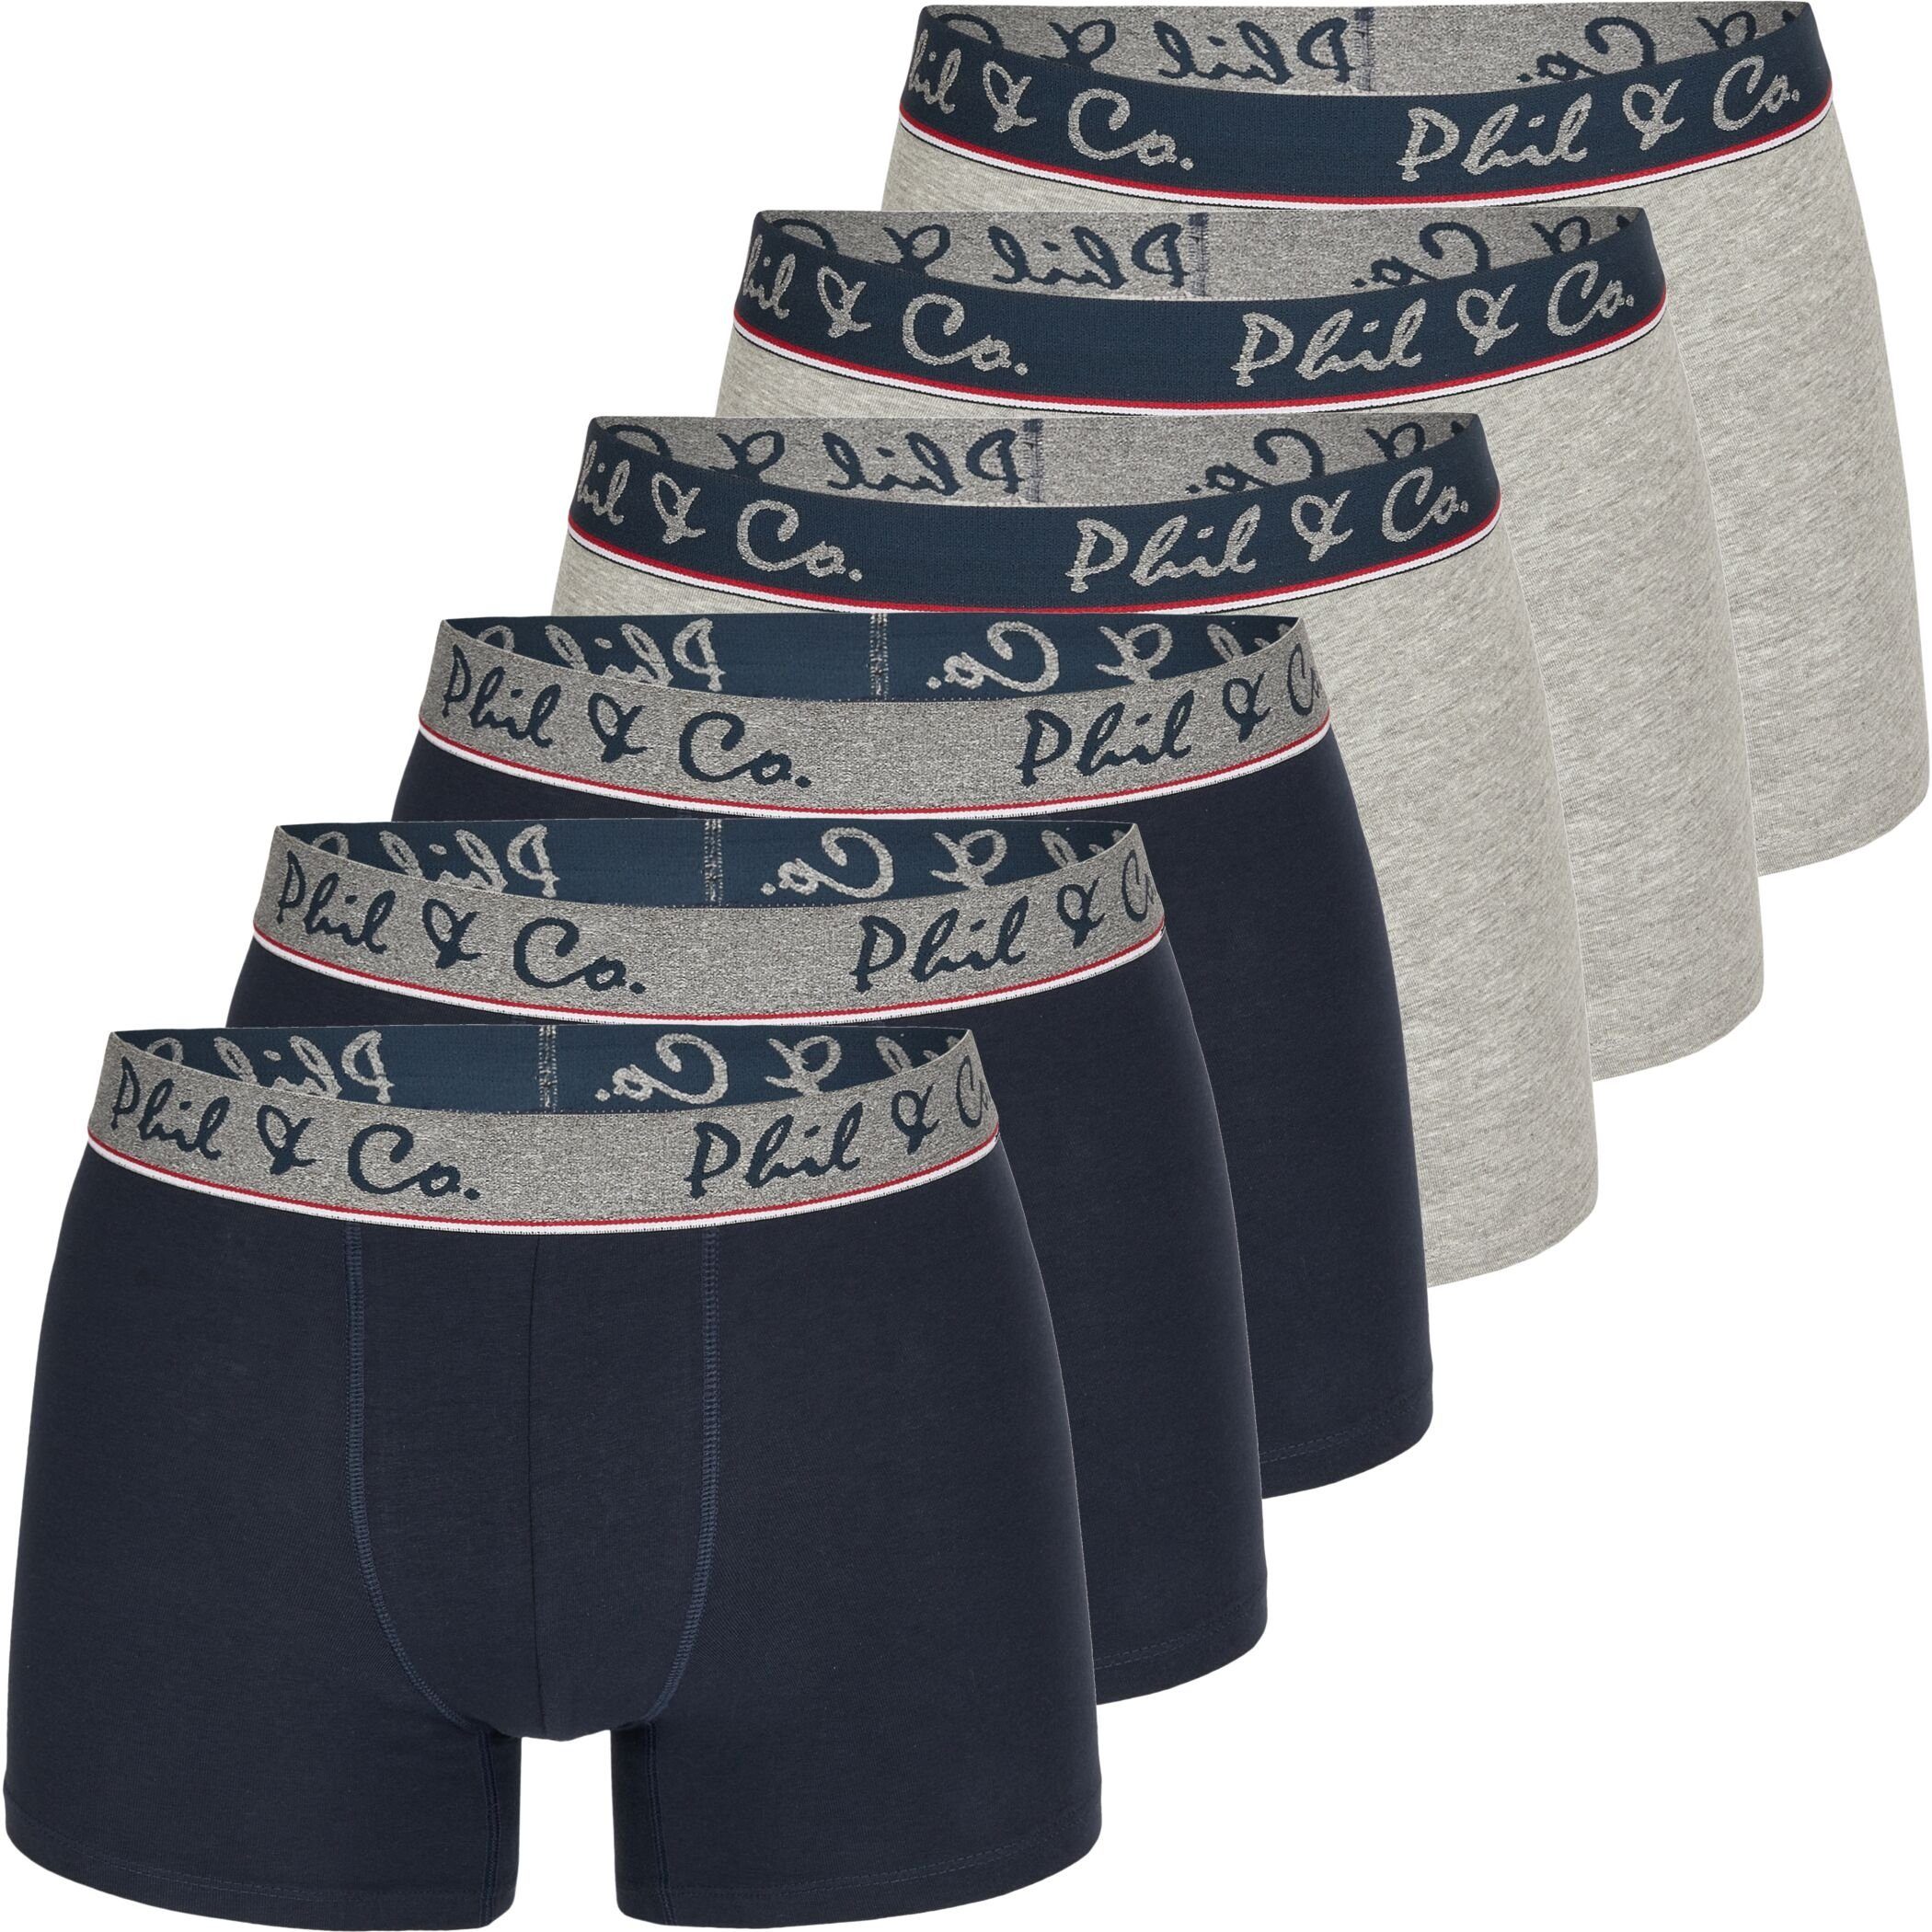 Phil & Co. Boxershorts Pant Boxershorts Jersey (1-St) 17 Short & Berlin 6er Trunk Phil Co DESIGN FARBWAHL Pack